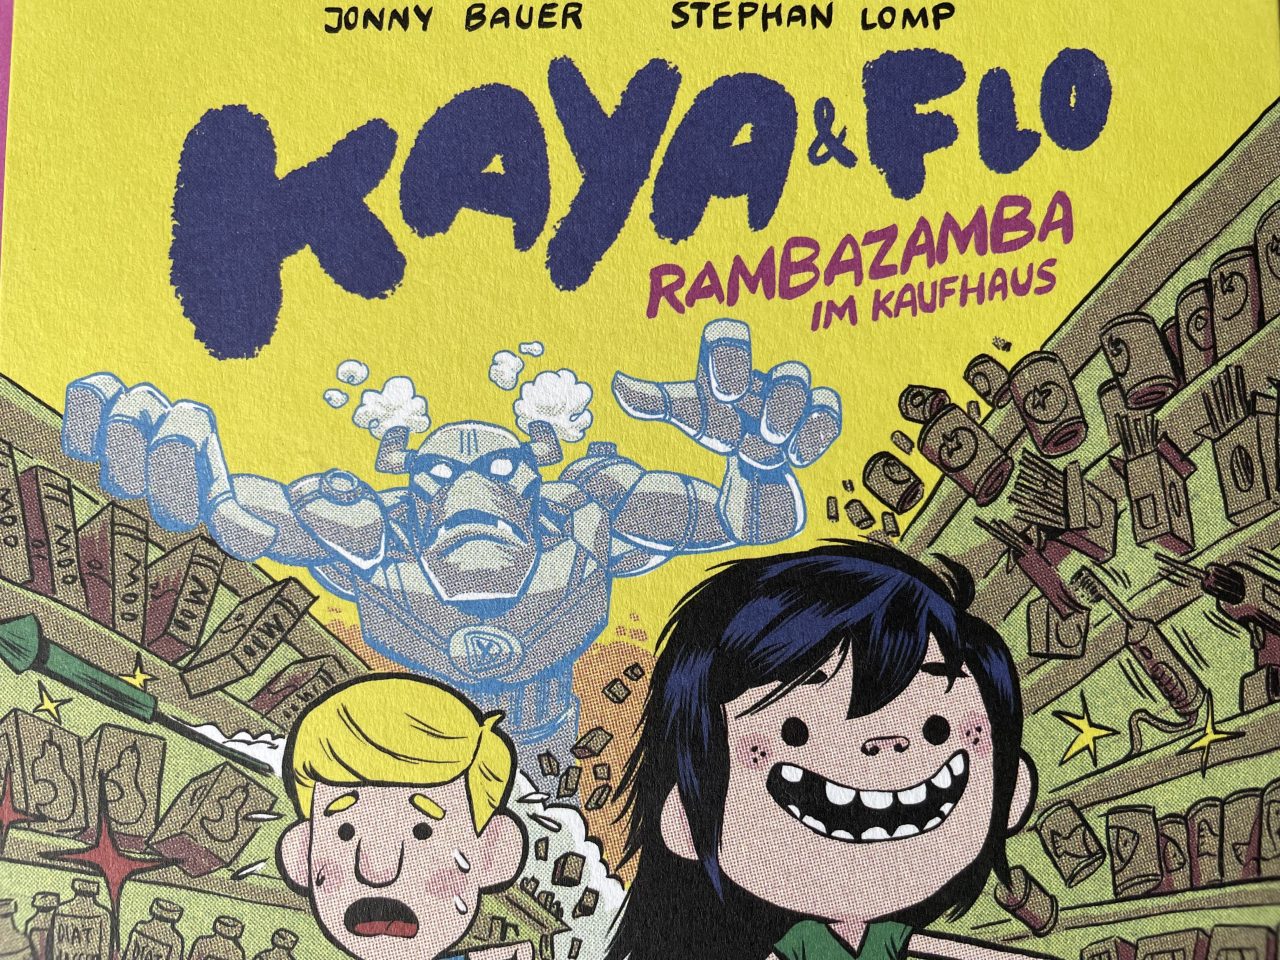 Teilblick auf das Cover des Kindercomics "Kaja&Flo - Rambazamba im Kaufhaus" 